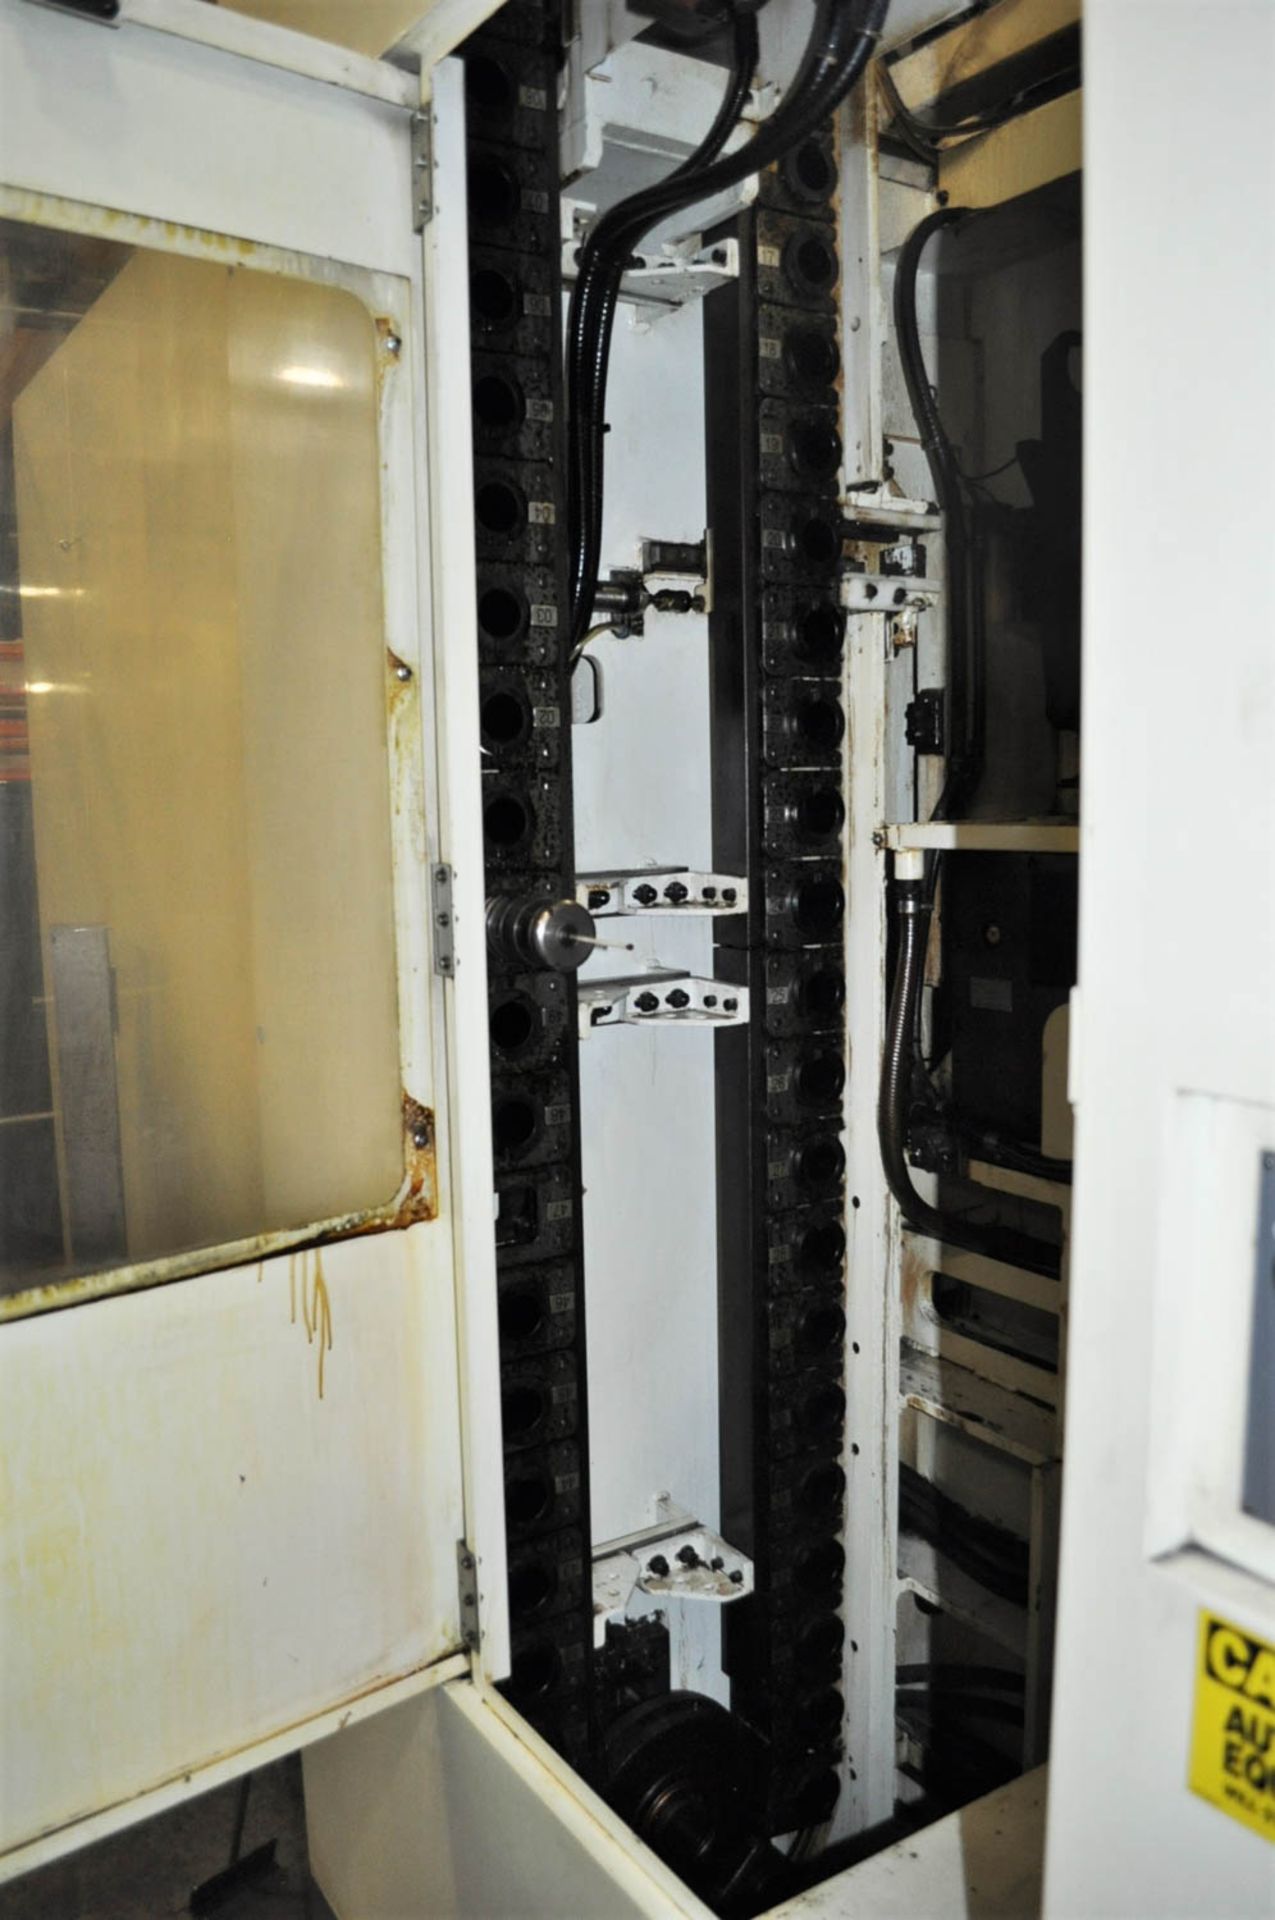 KITAMURA MYCENTER MDL. HX400i CNC HORIZONTAL MACHINING CENTER, WITH FANUC 16iM CNC CONTROL, TRAVELS: - Image 7 of 8